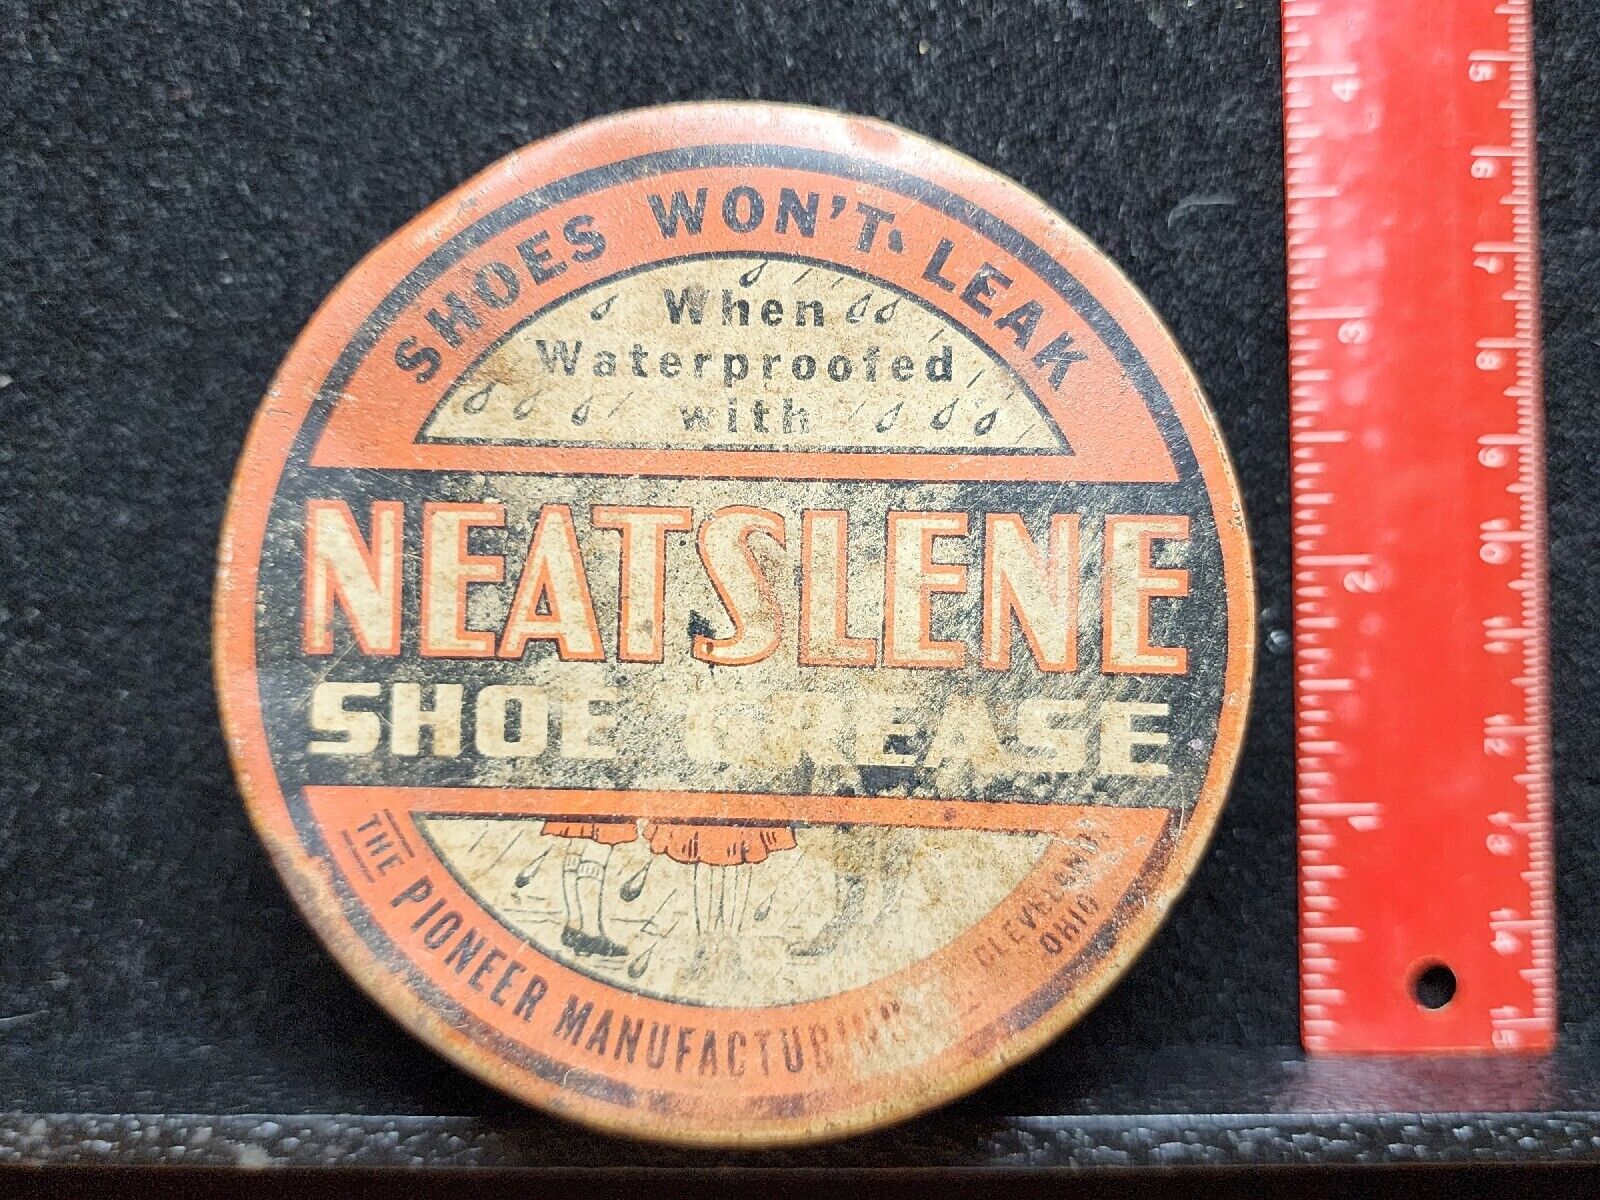 Vintage 30s Boot Shoe Grease Tin NEATSLENE PIONEER CLEVELAND OHIO Used 